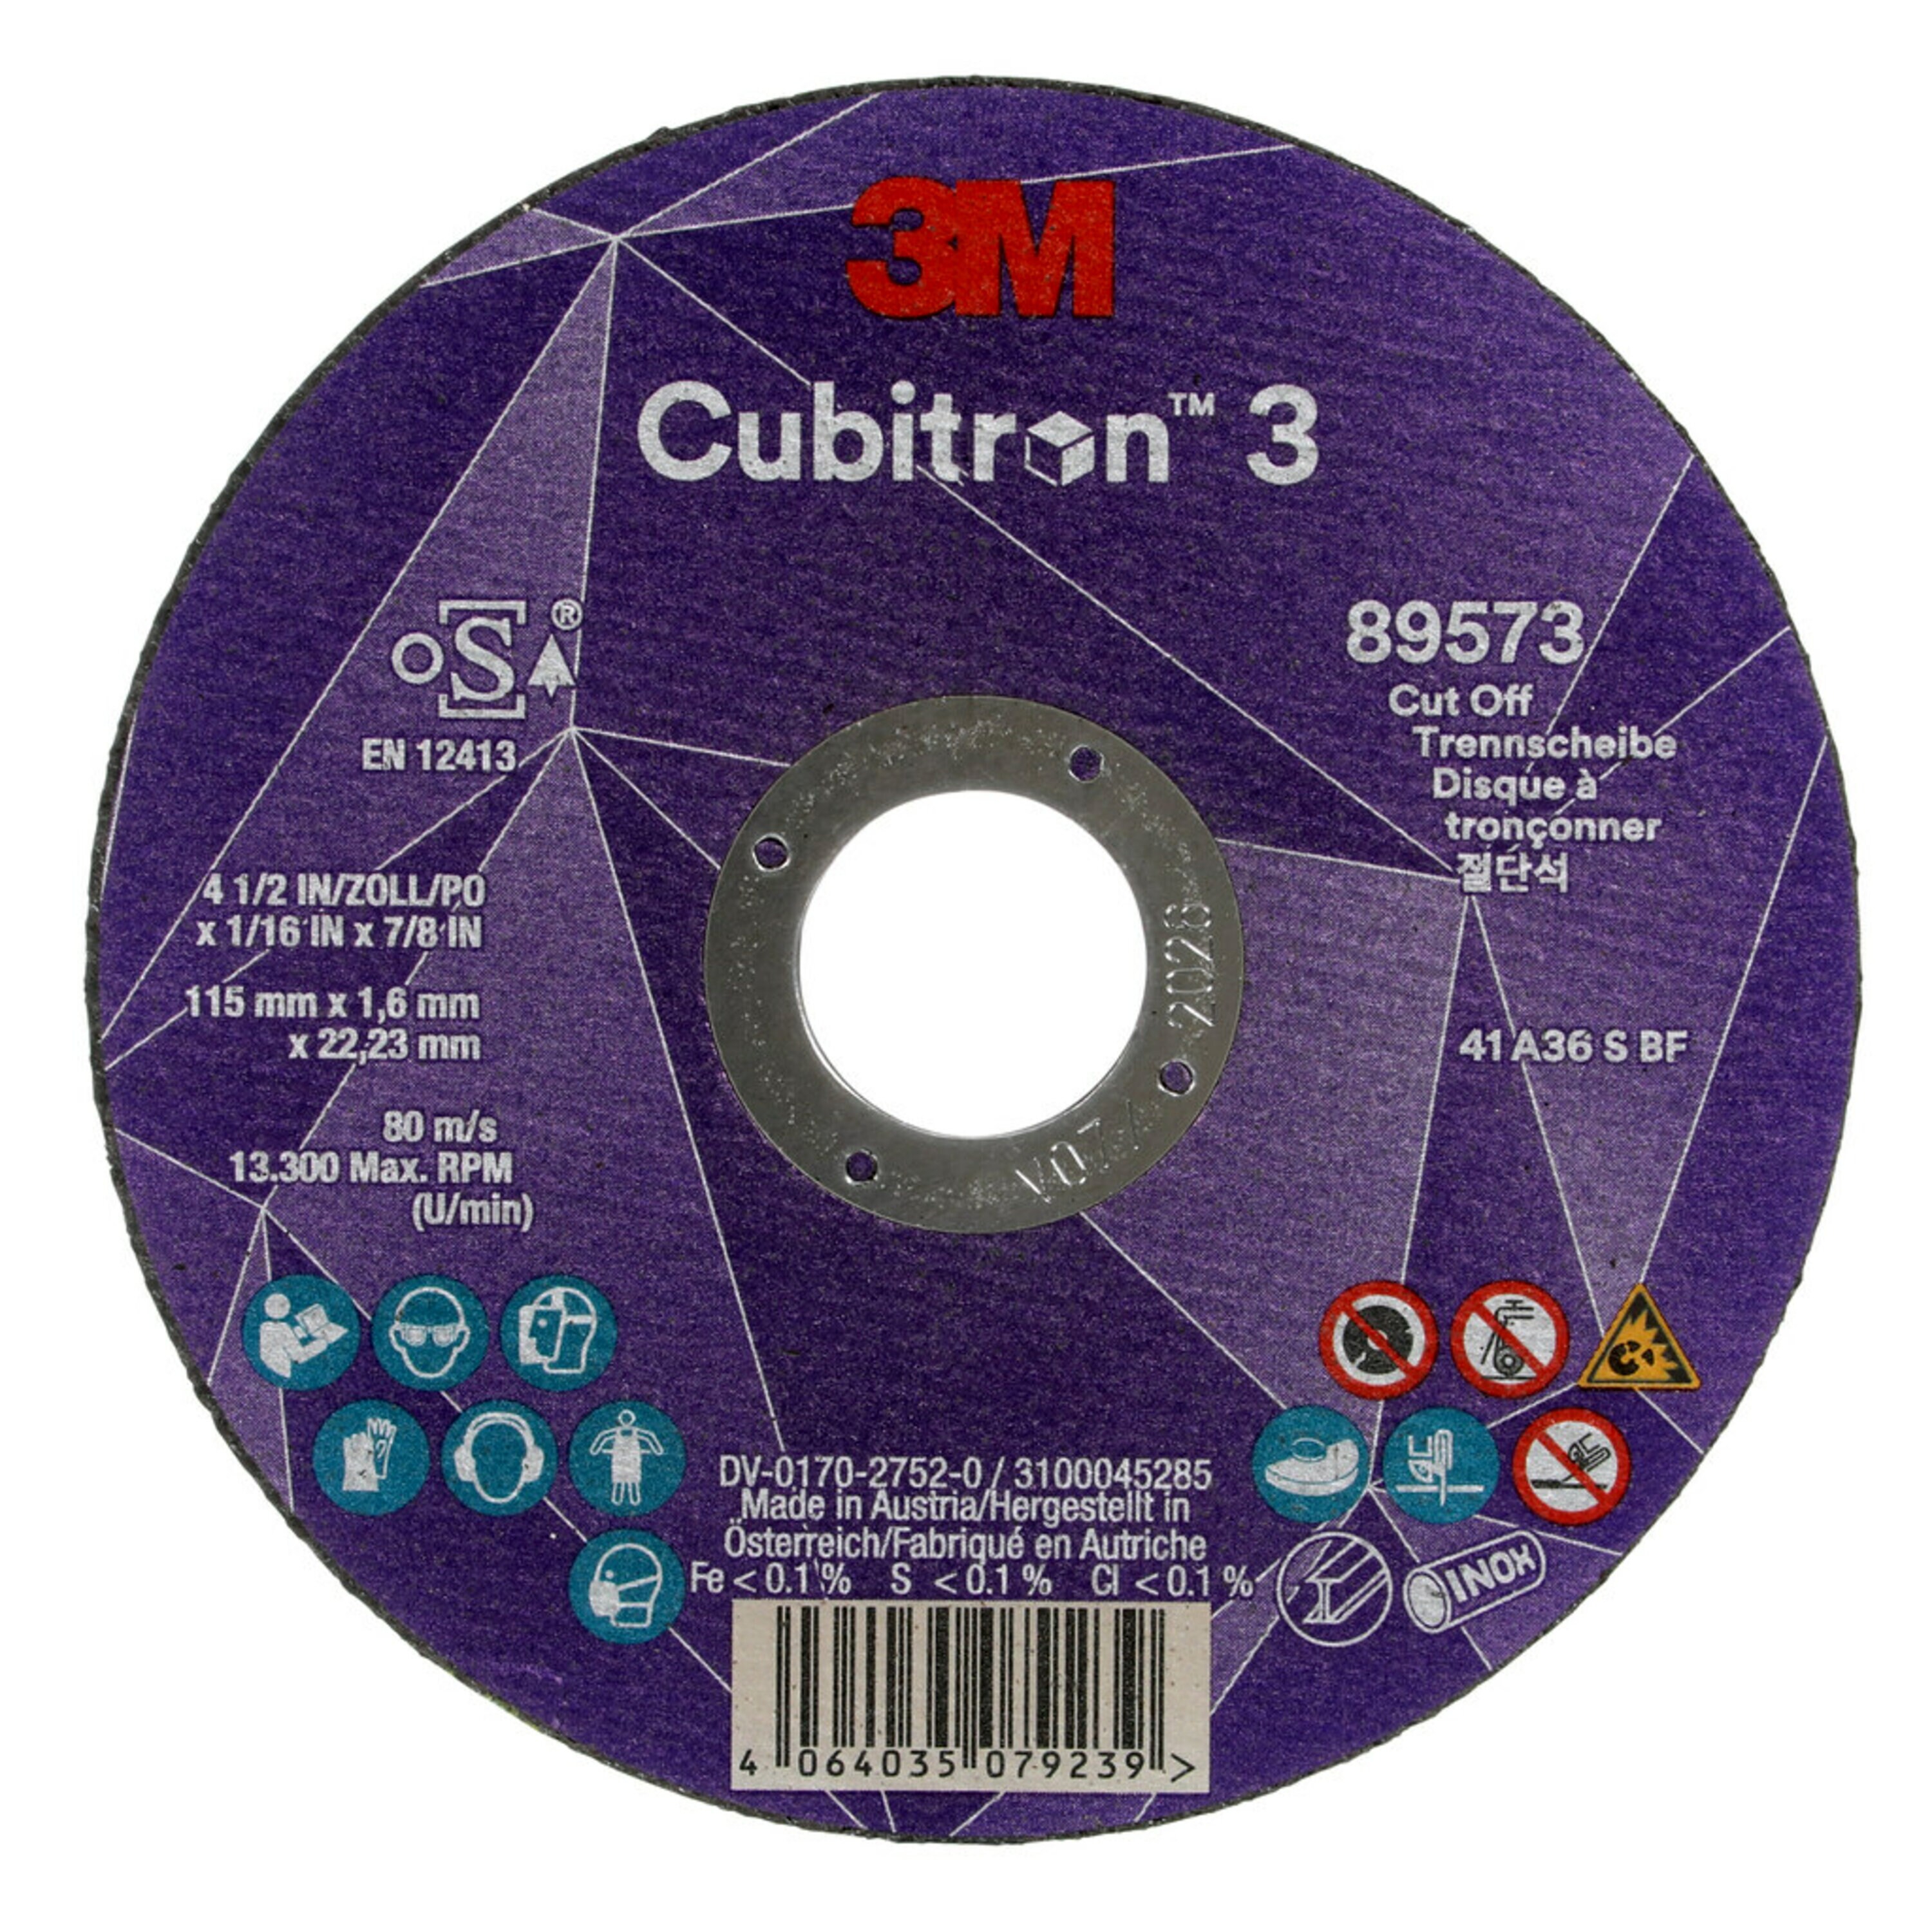 3M Cubitron 3 cut-off wheel, 115 mm, 1.6 mm, 22.23 mm, 36 , type 41 #89573